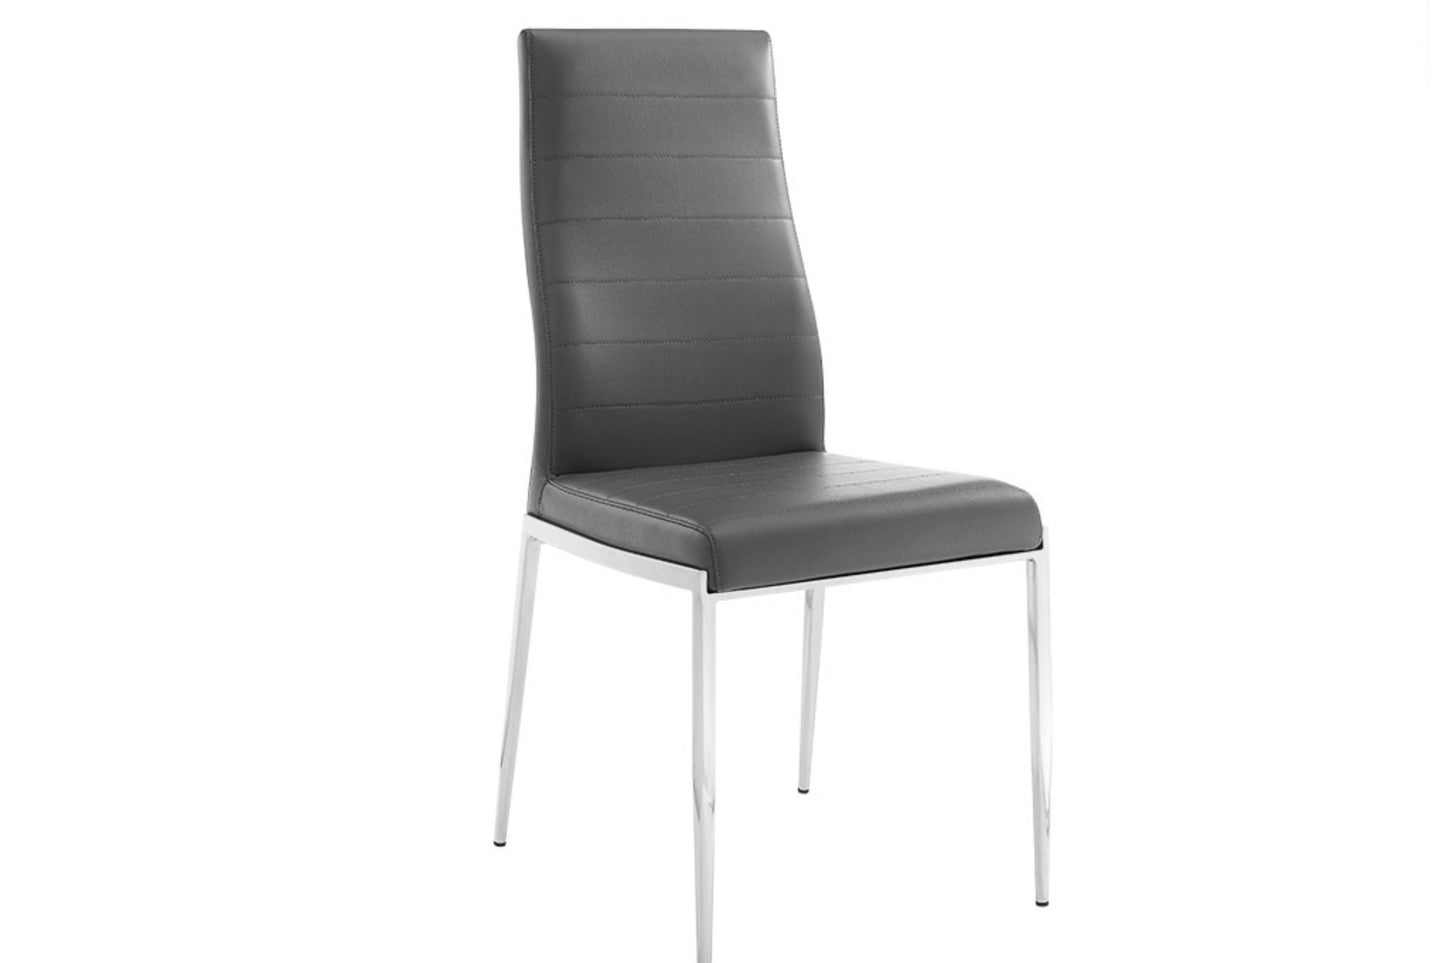 dining chair in dark gray